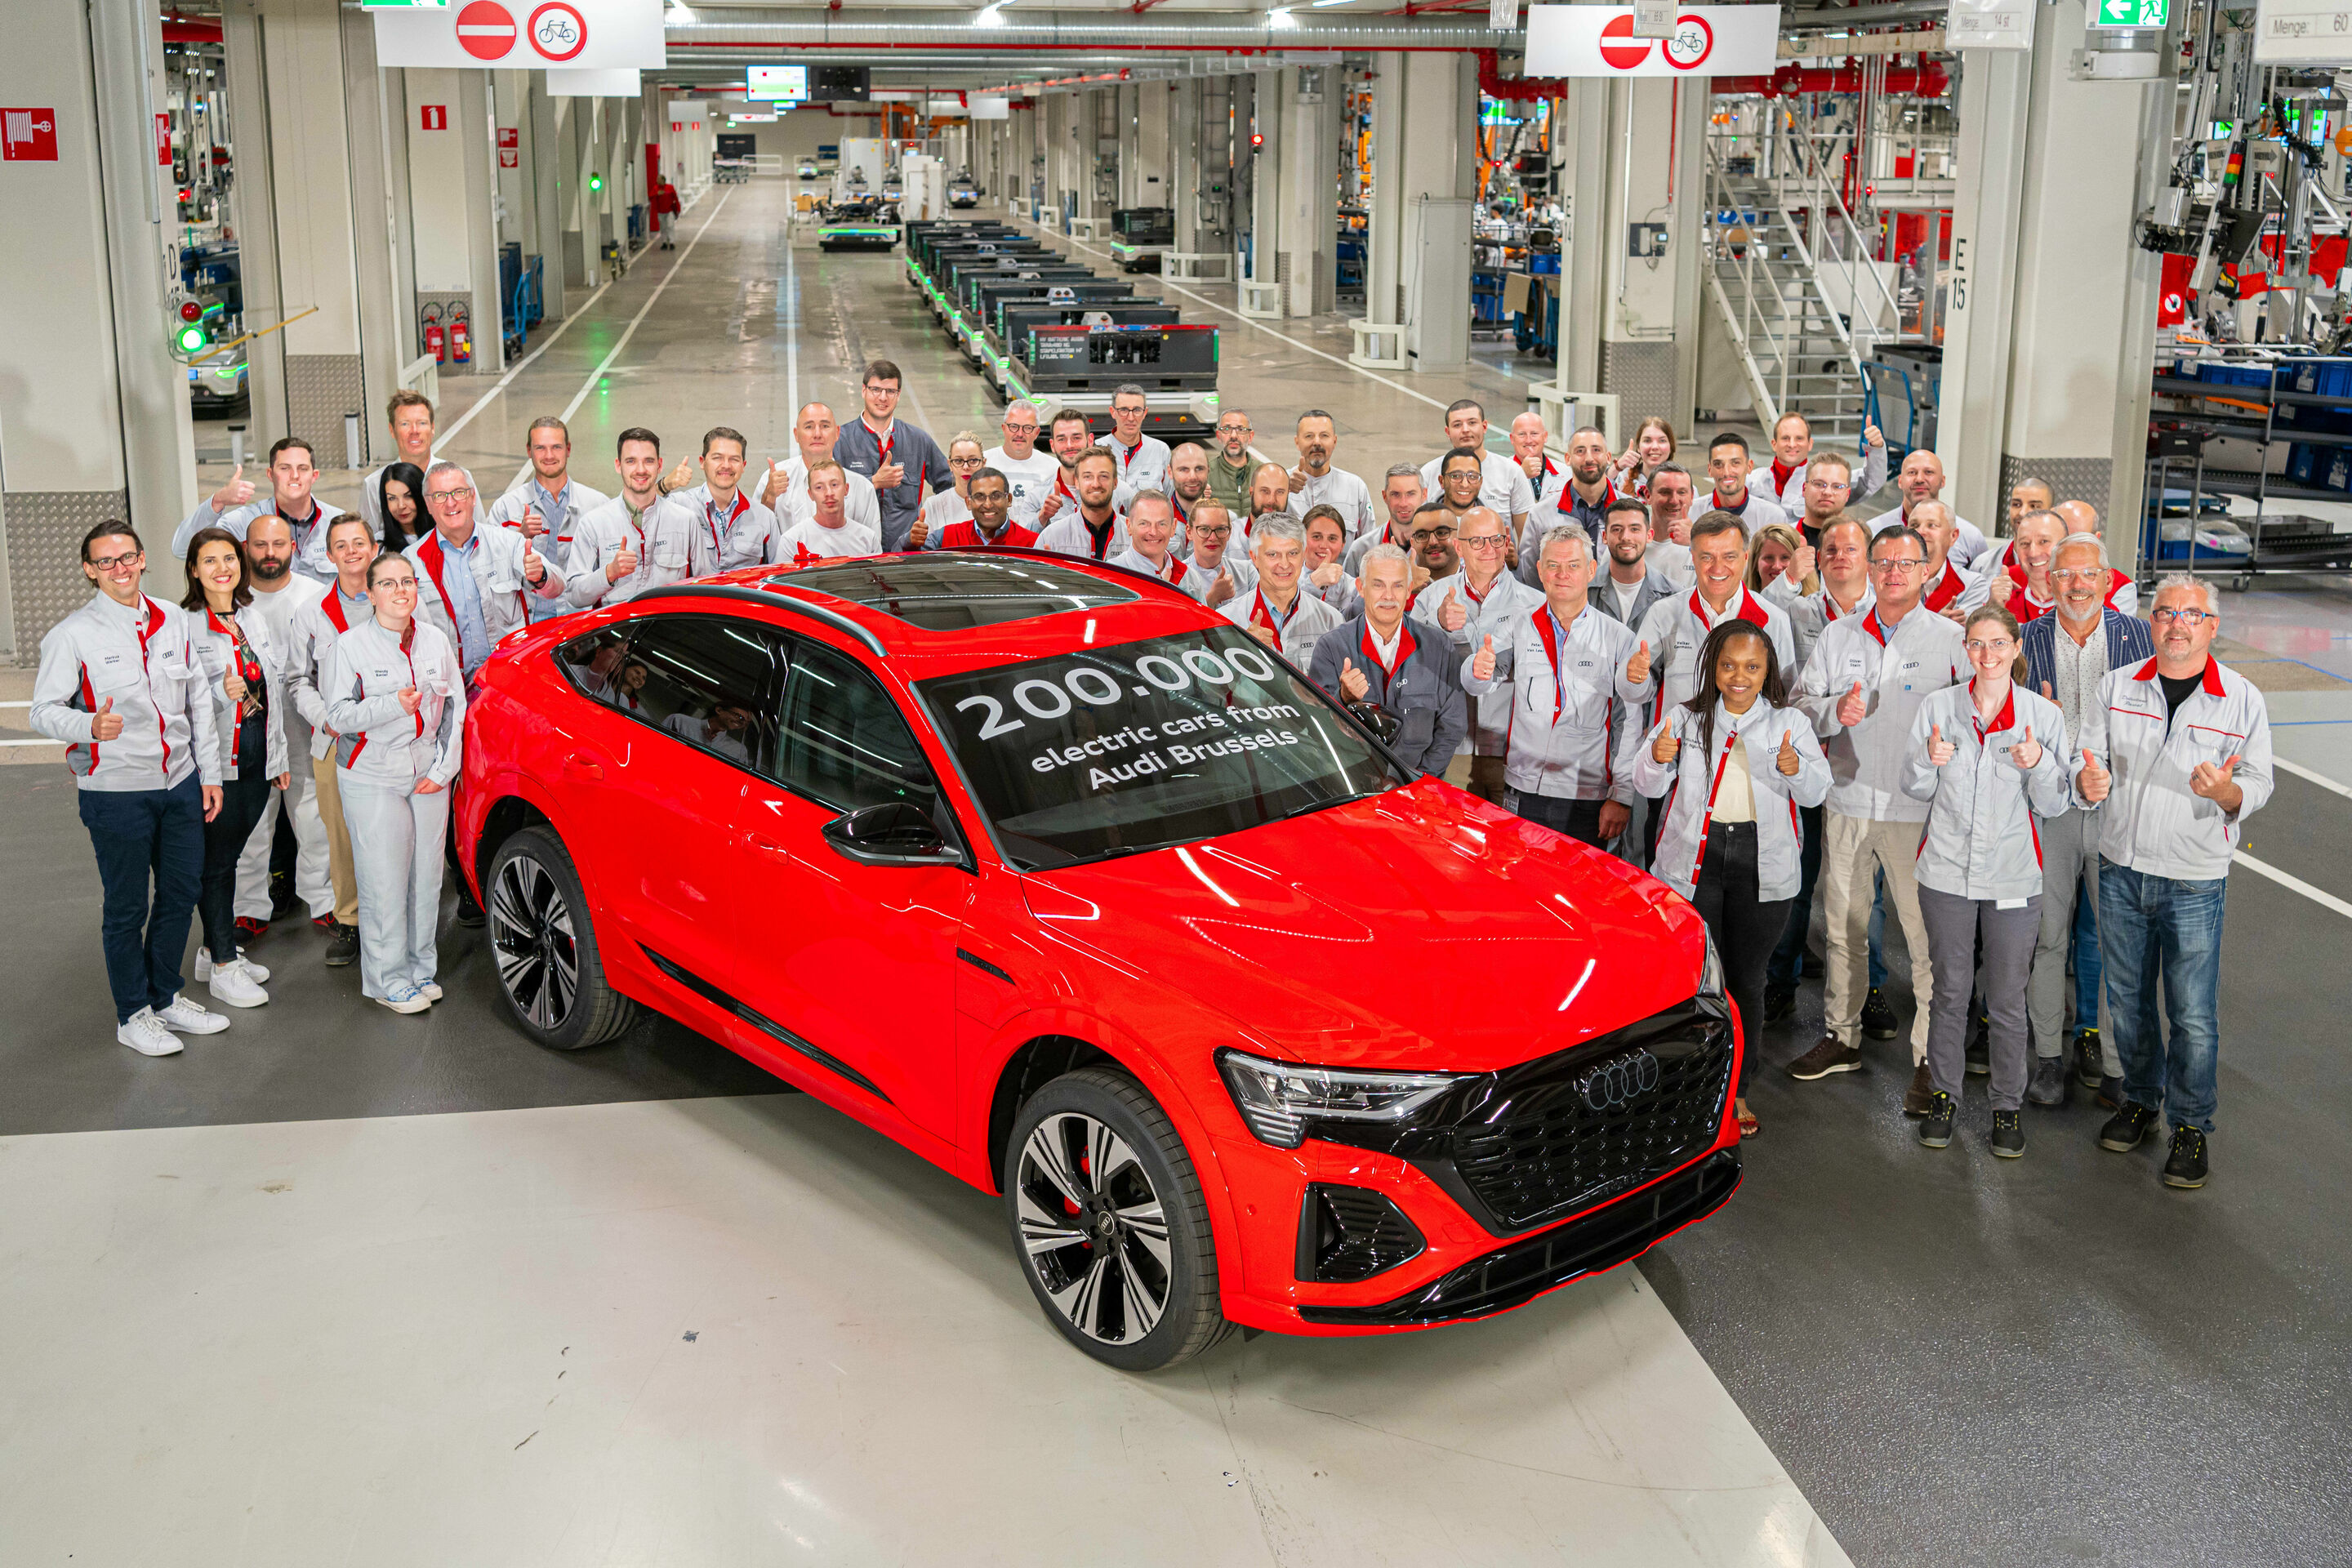 Audi Brussels fertigt 200.000 vollelektrische Fahrzeuge